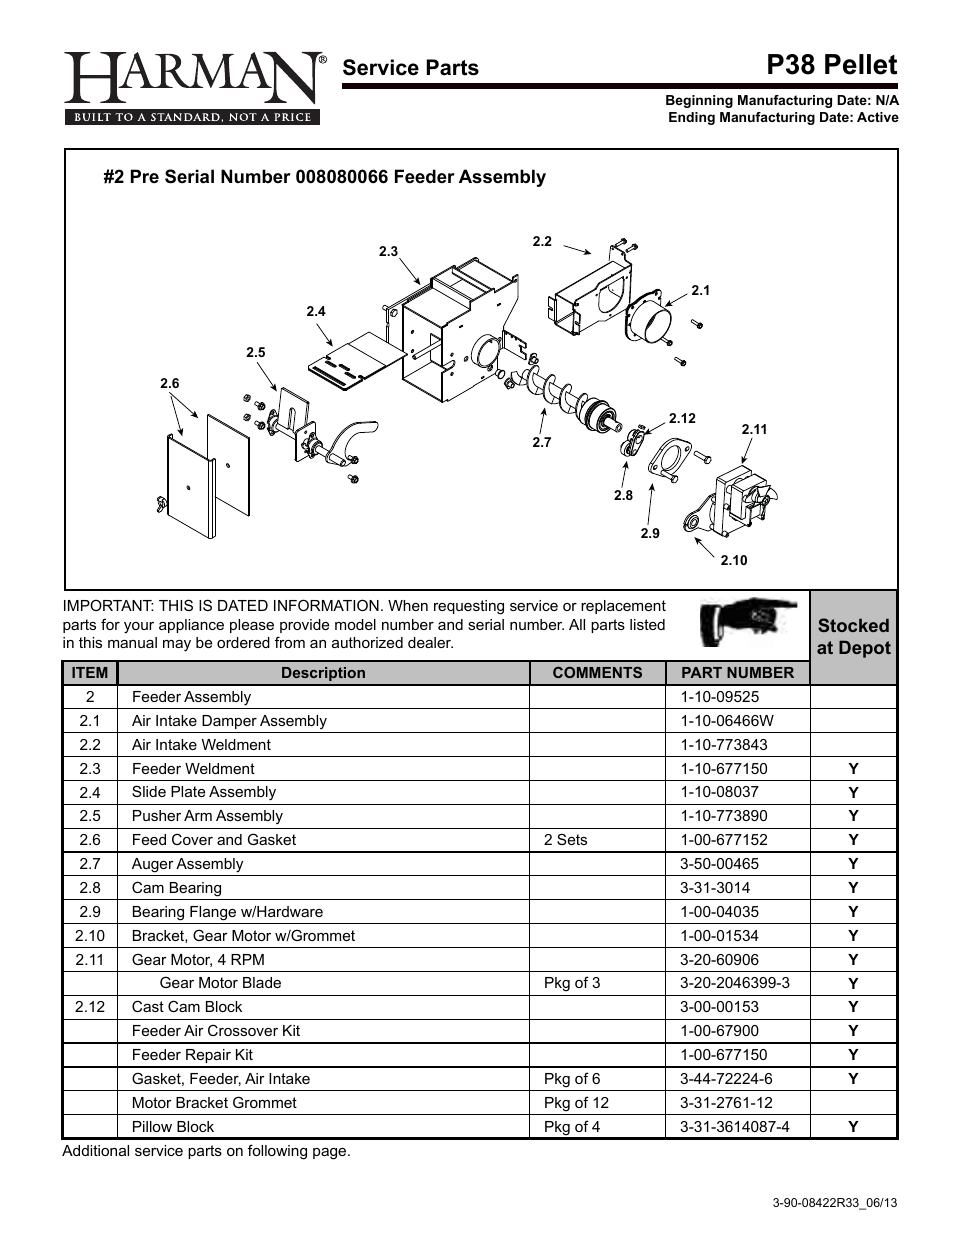 P38 pellet, Service parts | Harman PP38+ User Manual | Page 34 / 38